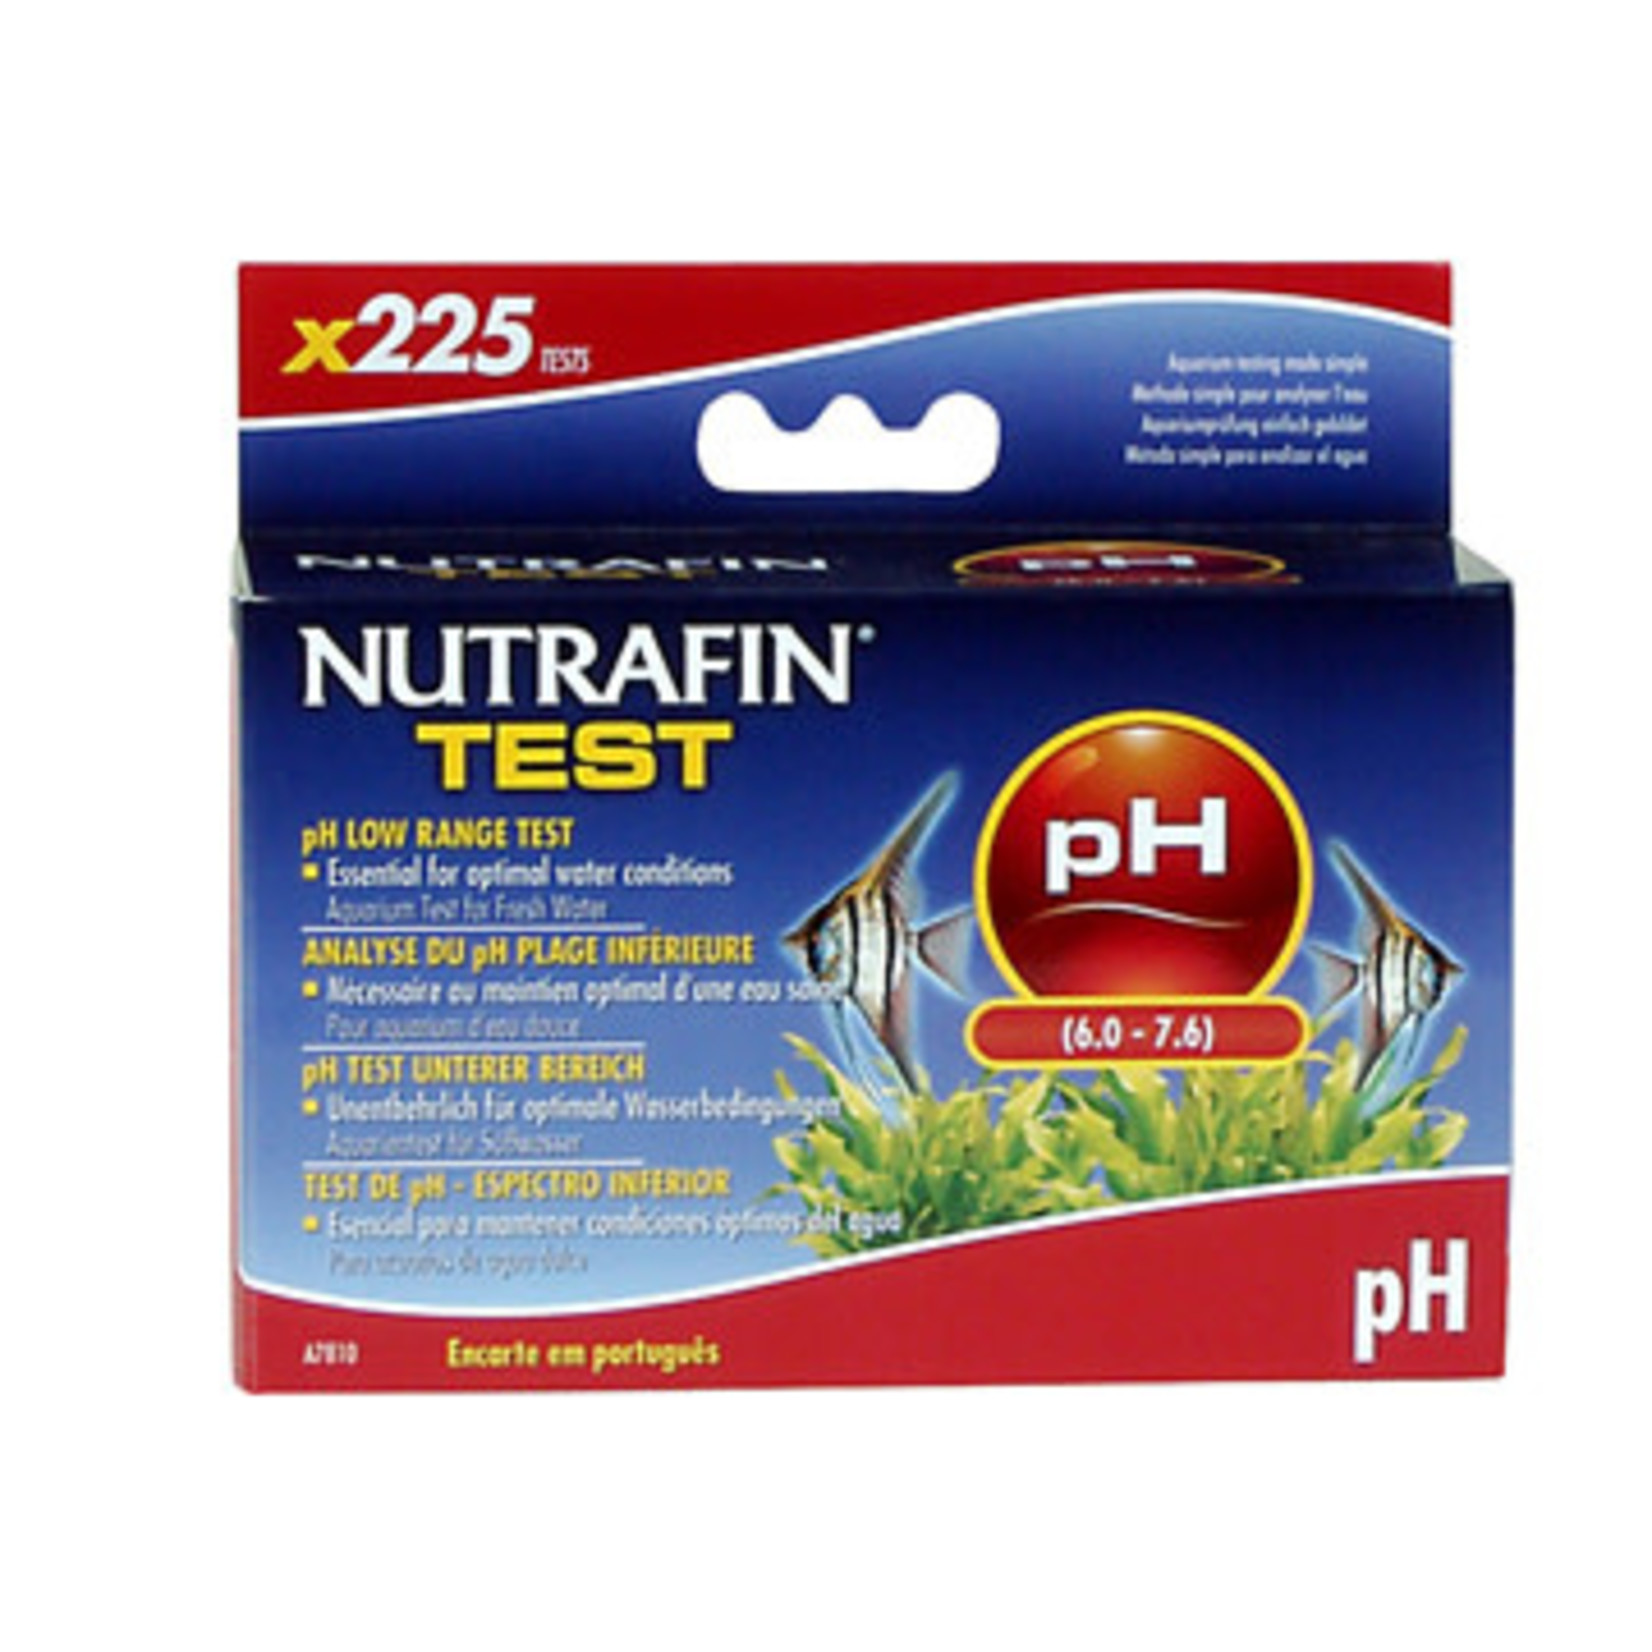 Nutrafin Nutrafin pH Low Range Test (6.0 - 7.6)